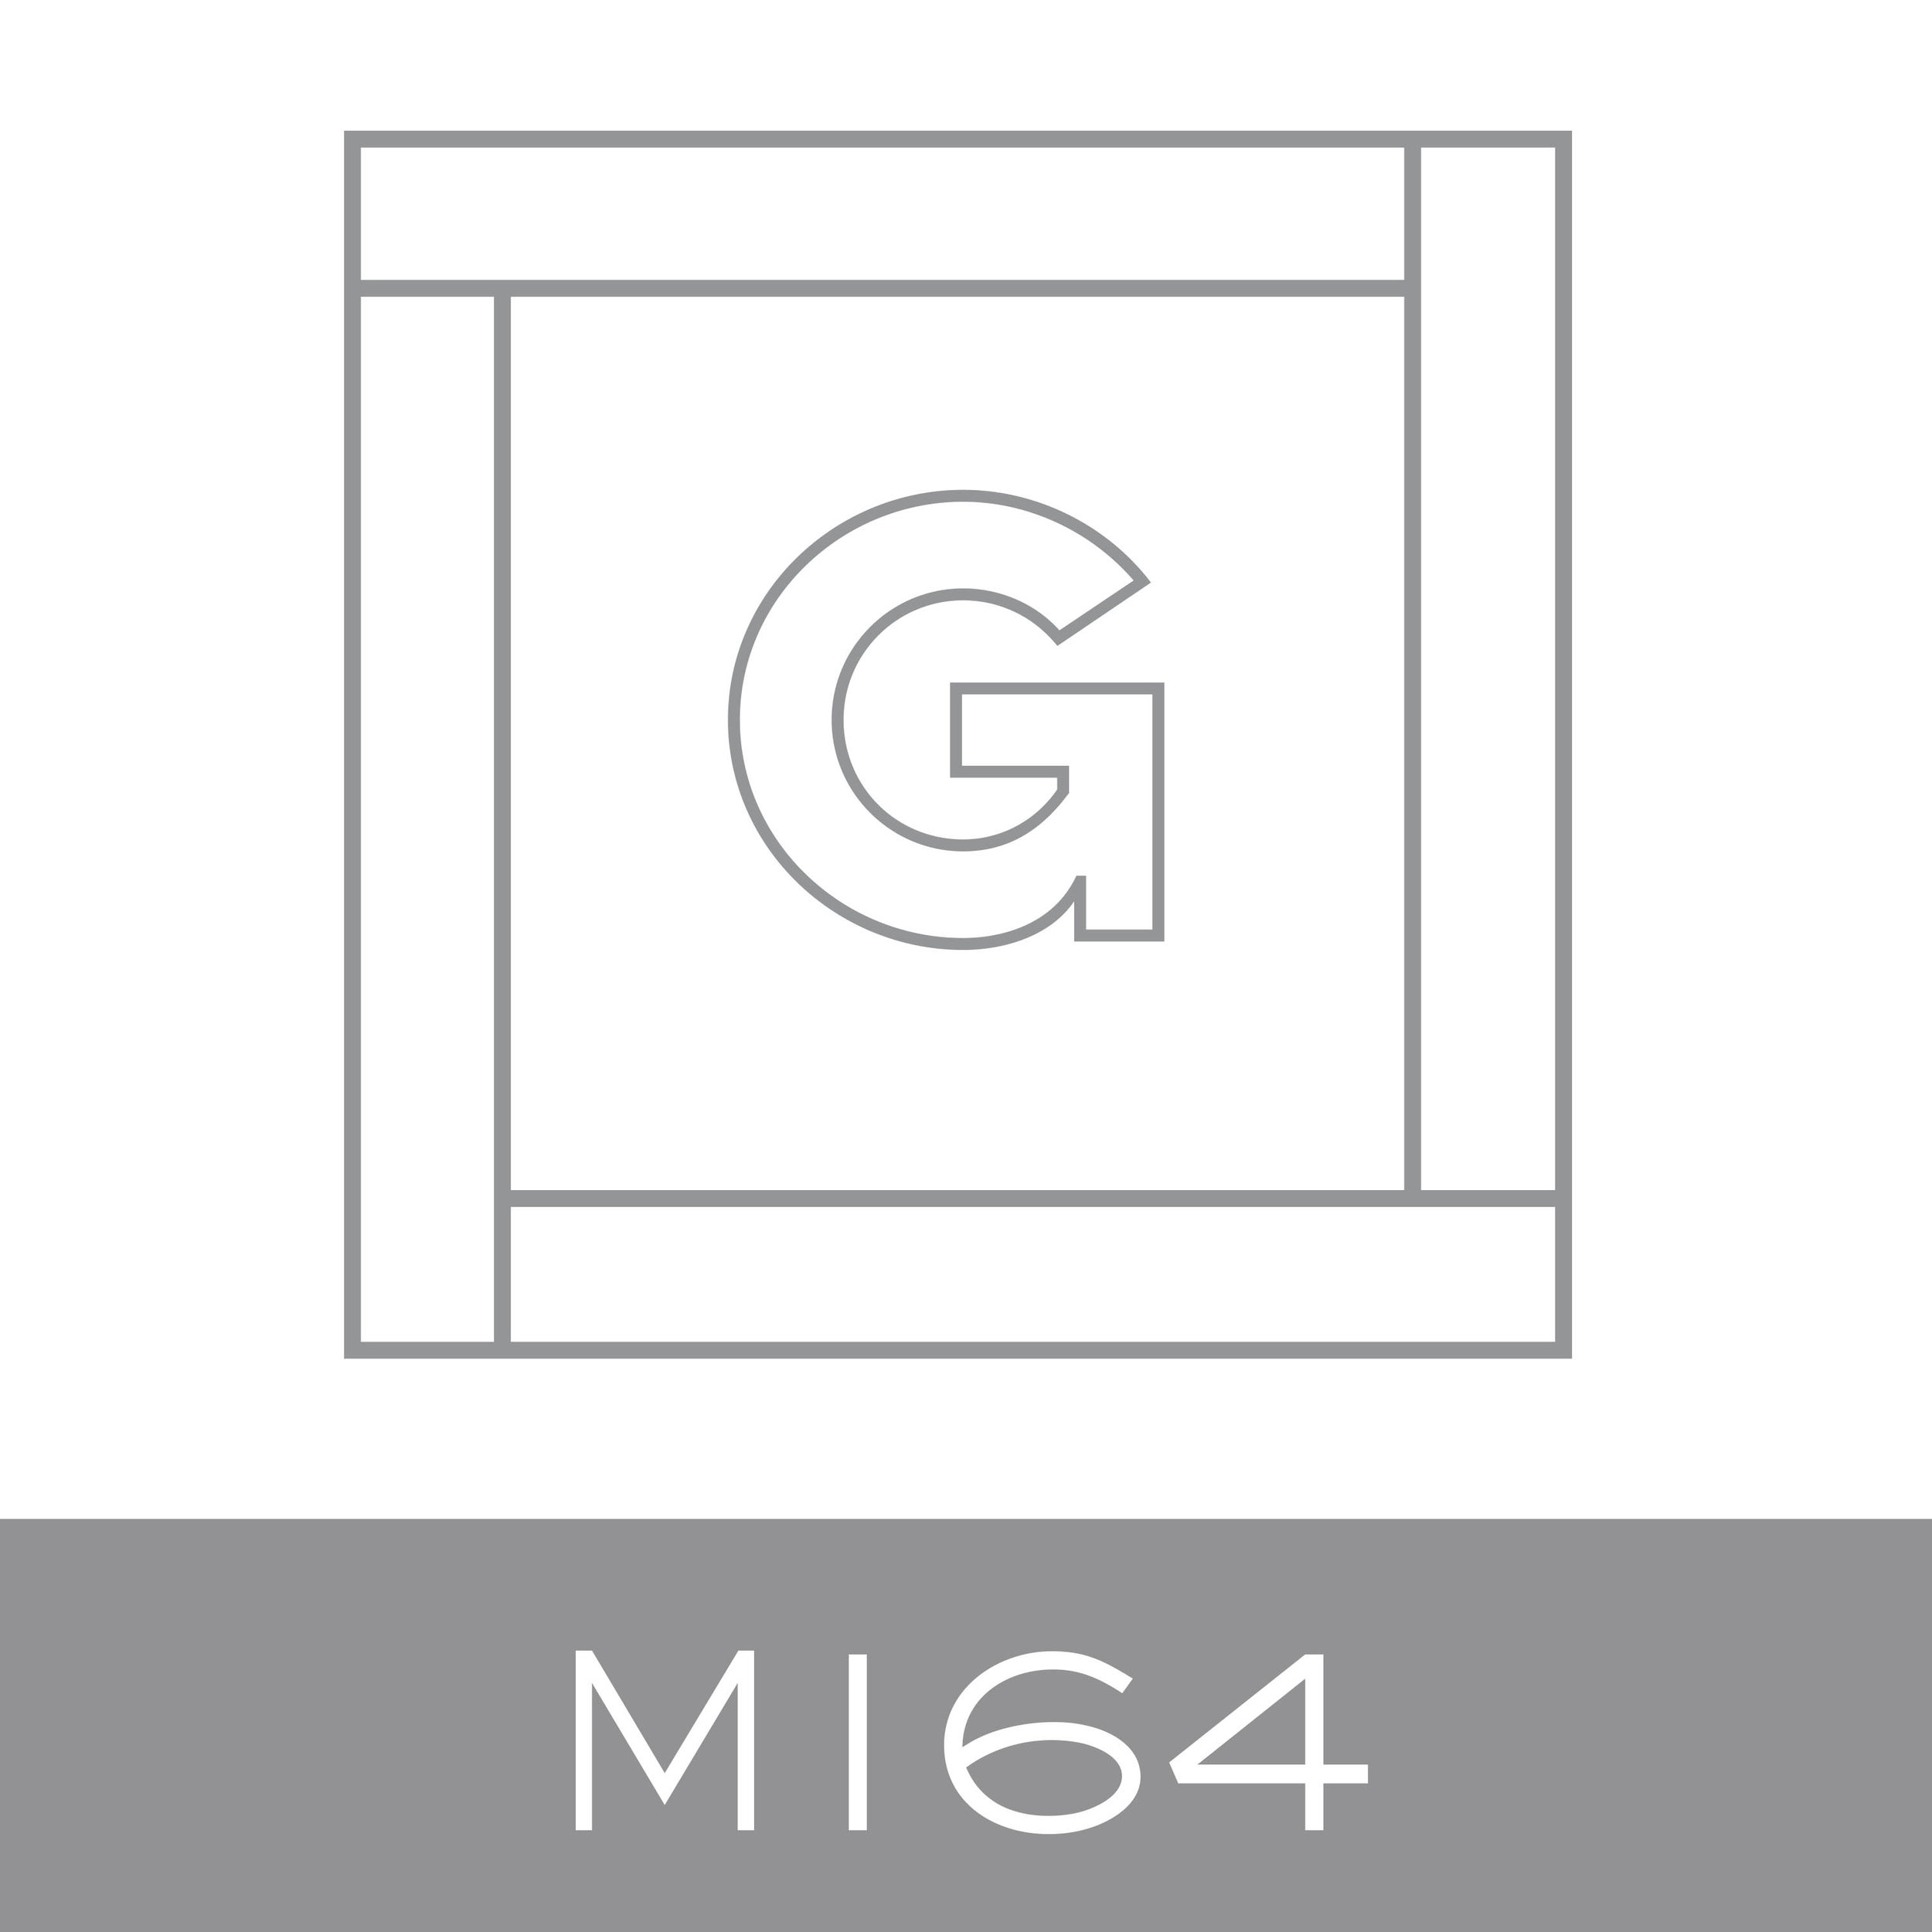 M164.jpg